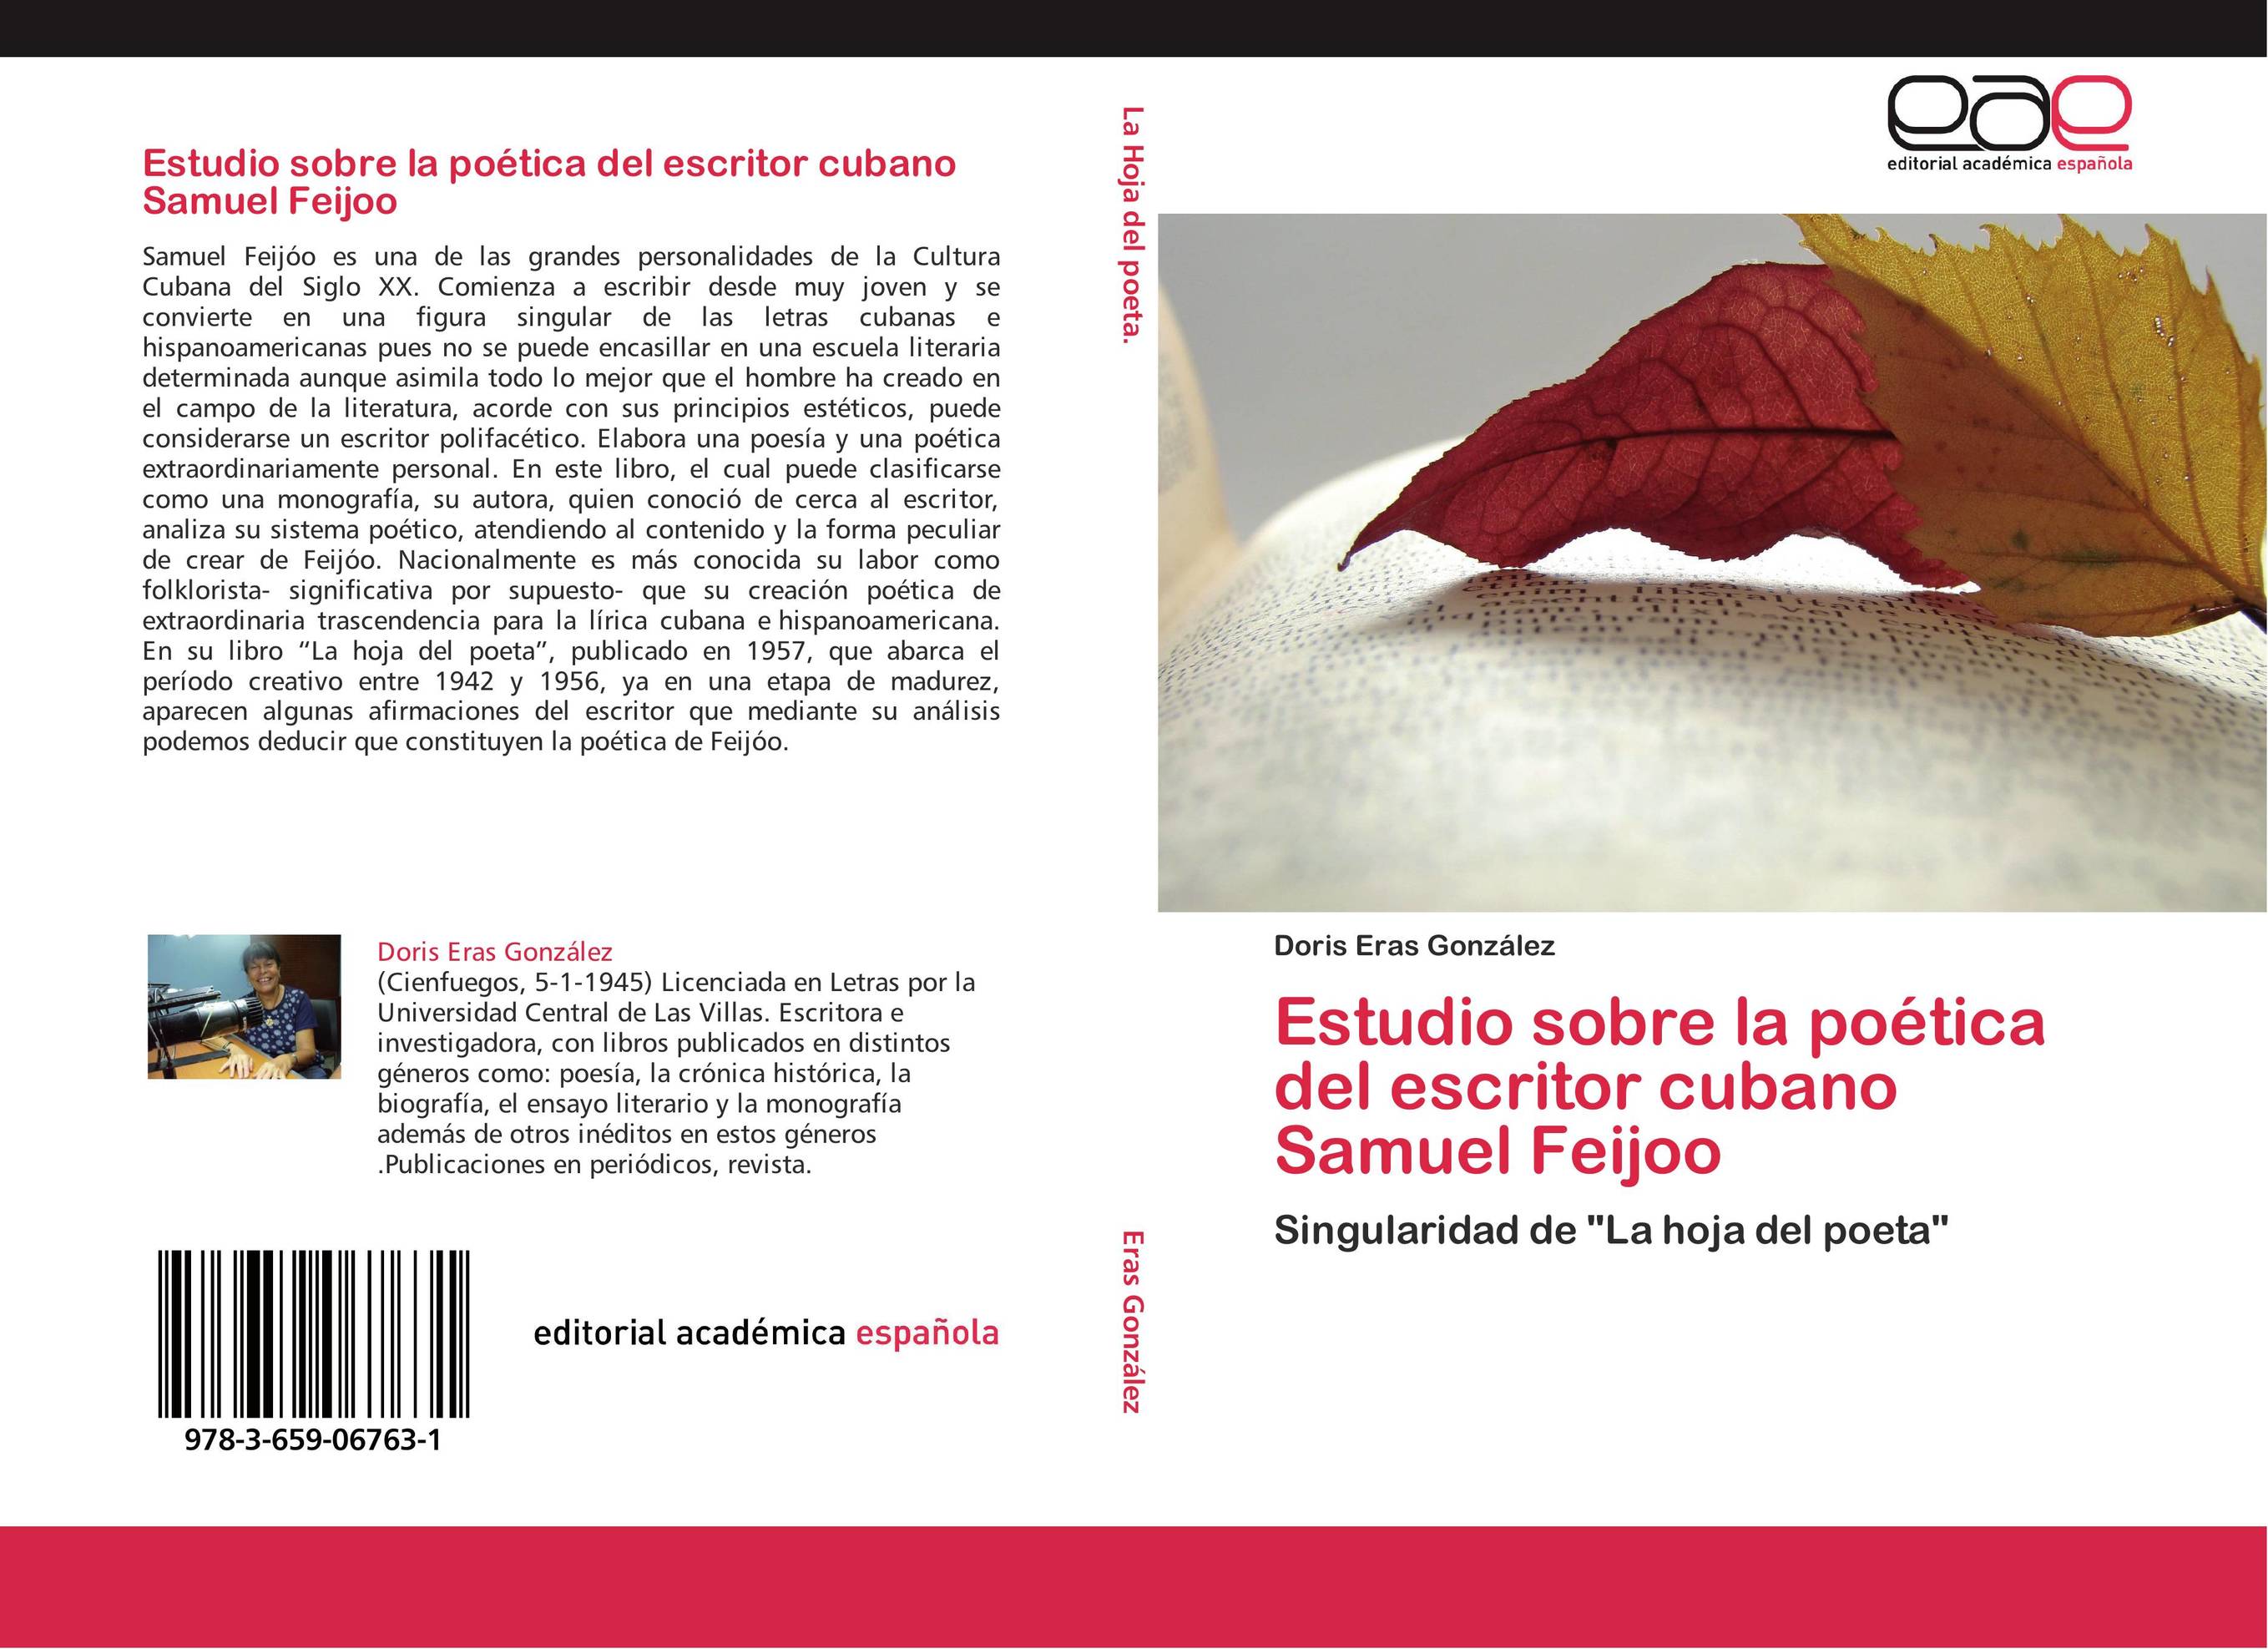 Estudio sobre la poética del escritor cubano Samuel Feijoo